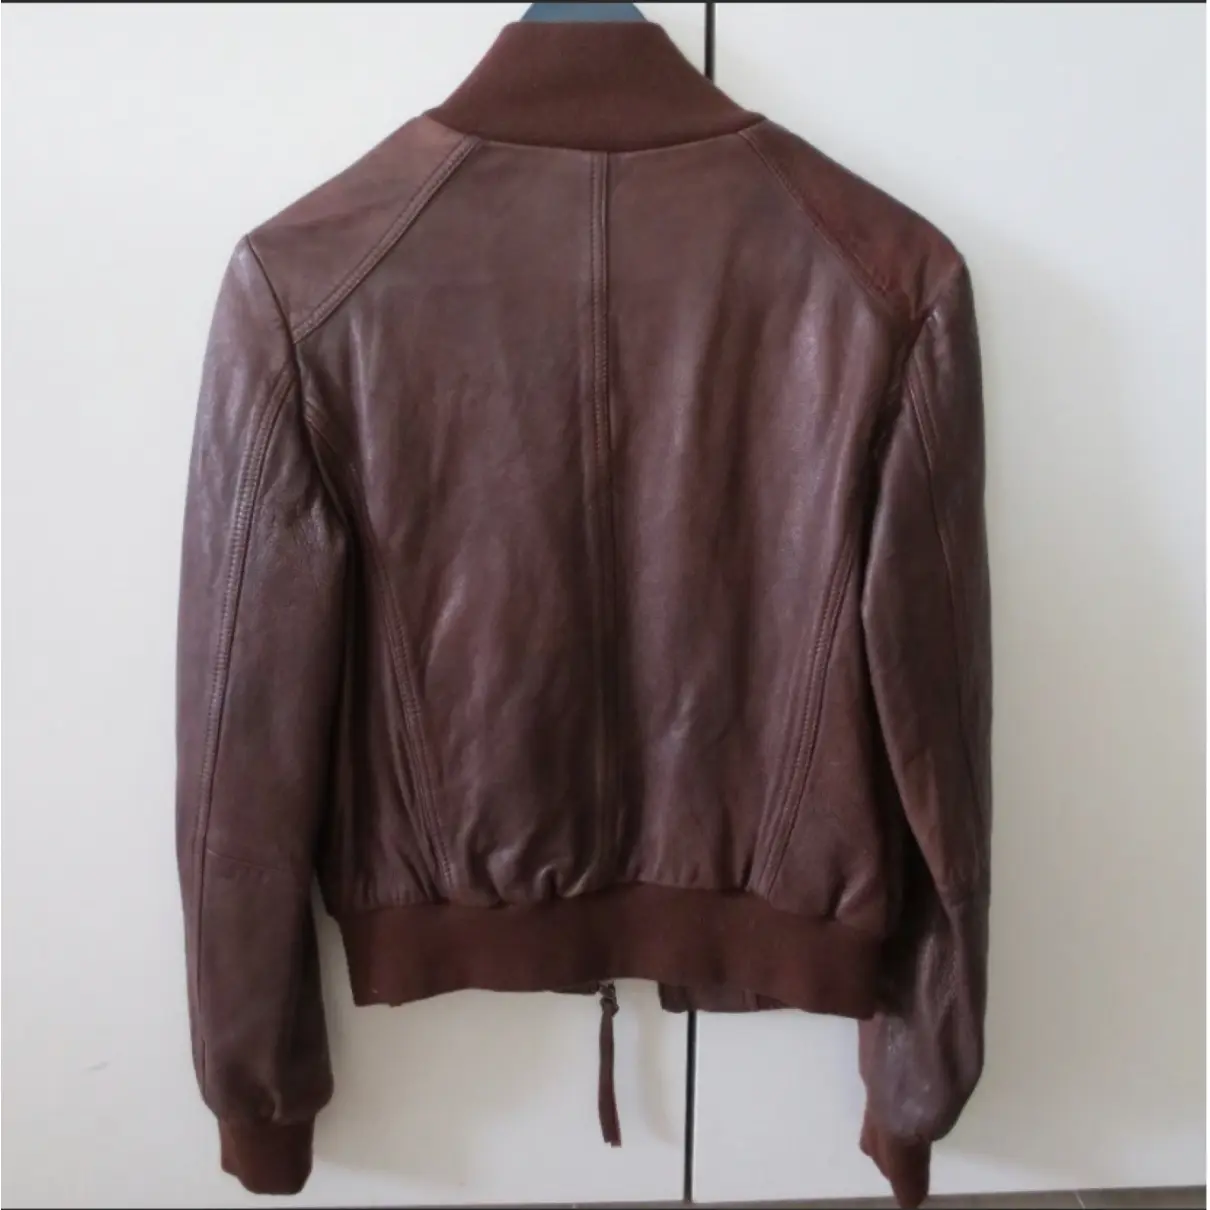 Buy Gas Leather biker jacket online